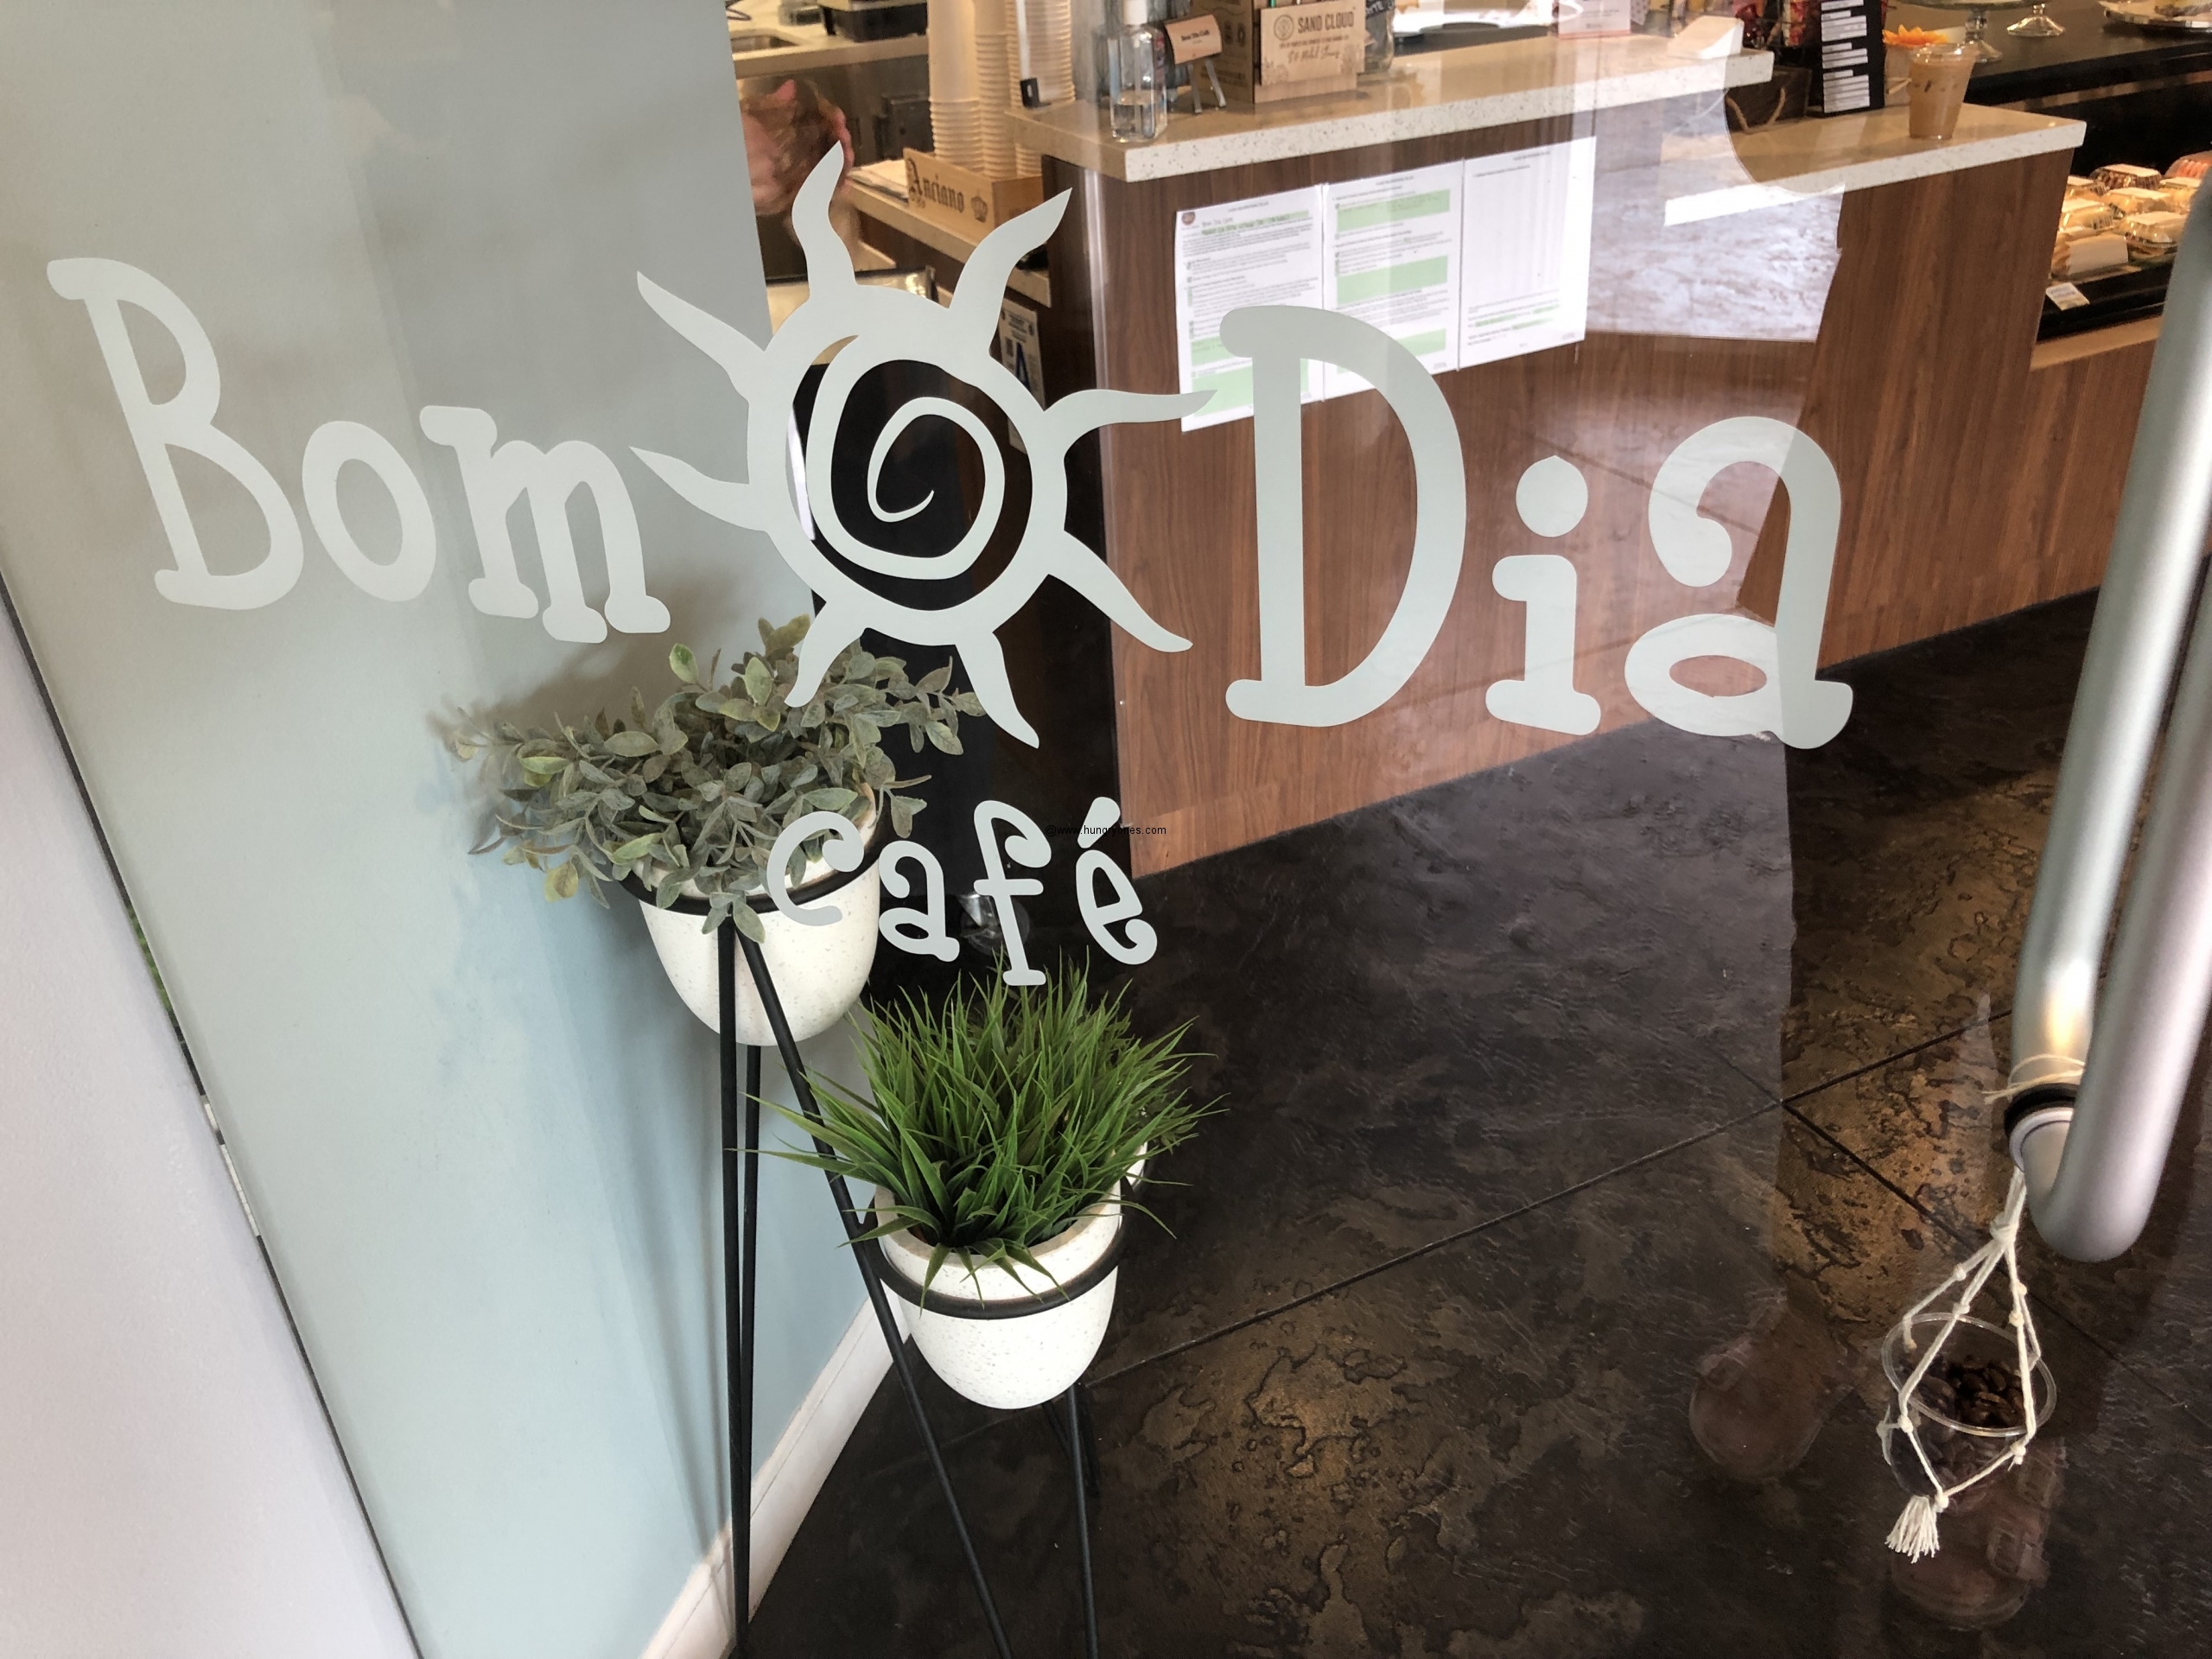 Bom Dia Cafe / 4660 La Jolla Village Drive P1 Level San Diego, CA 92122 -   - Food Blog